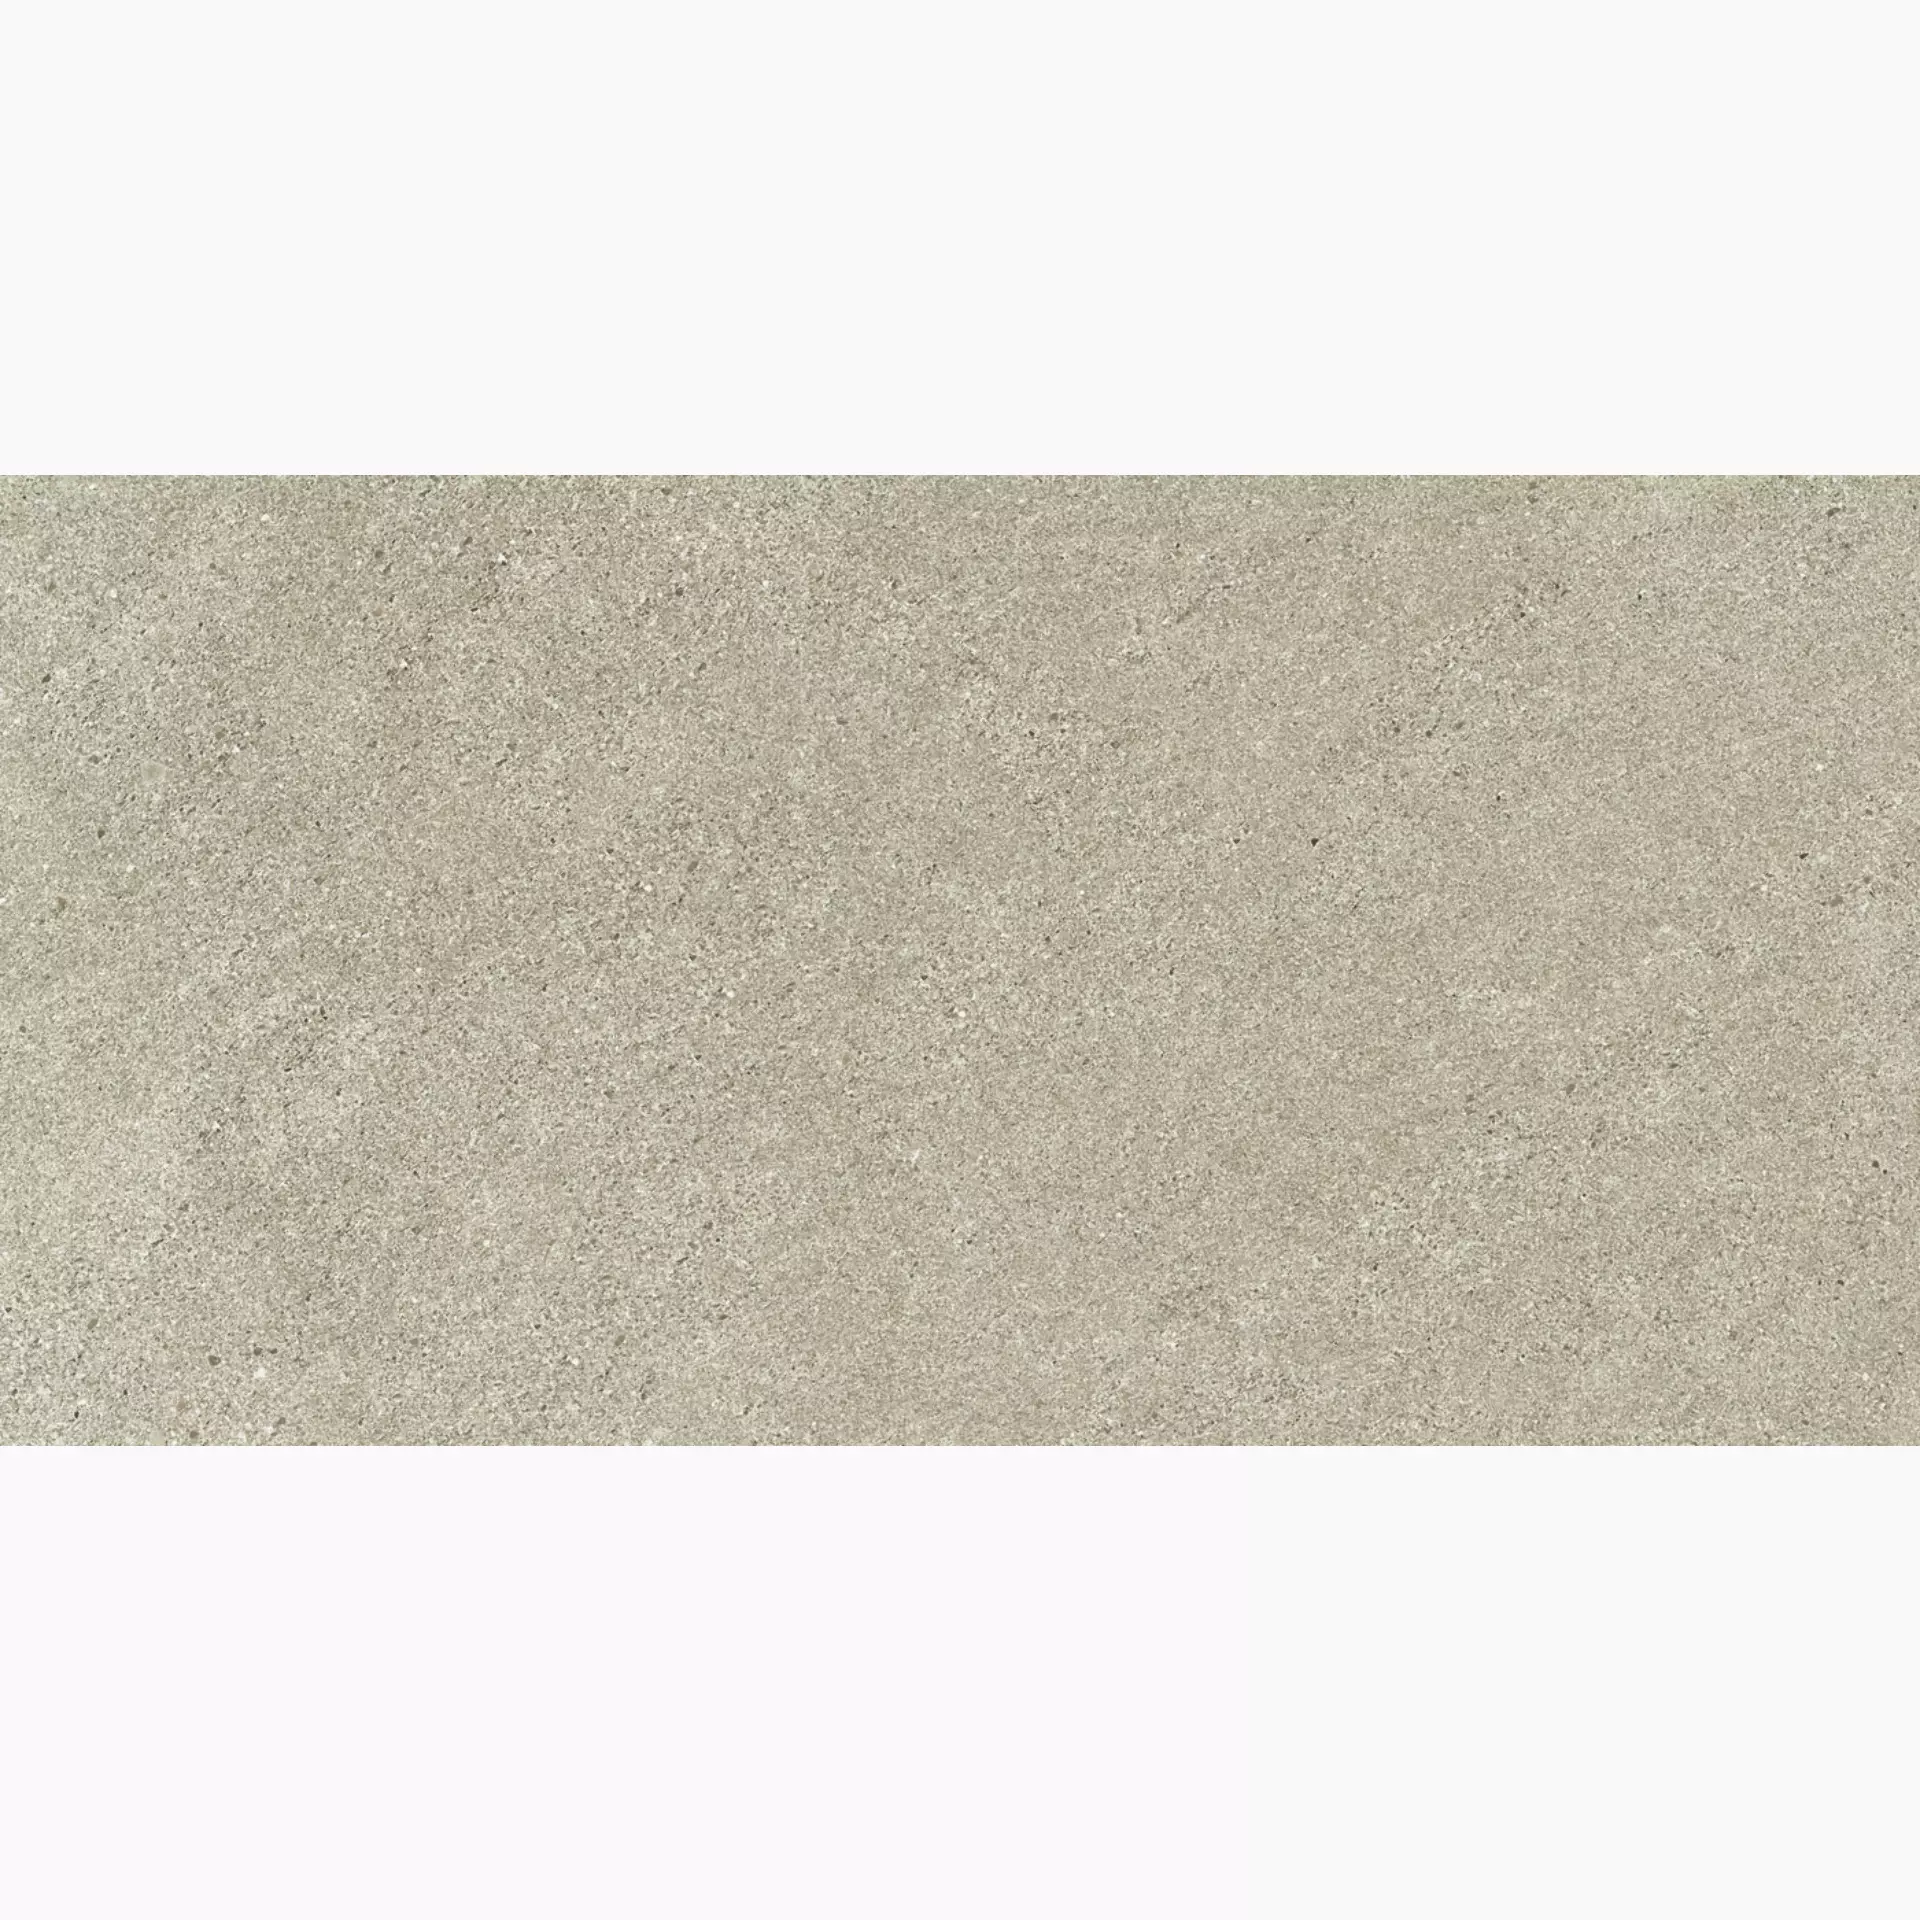 Ergon Stone Project Sand Naturale Controfalda E384 30x60cm rectified 9,5mm